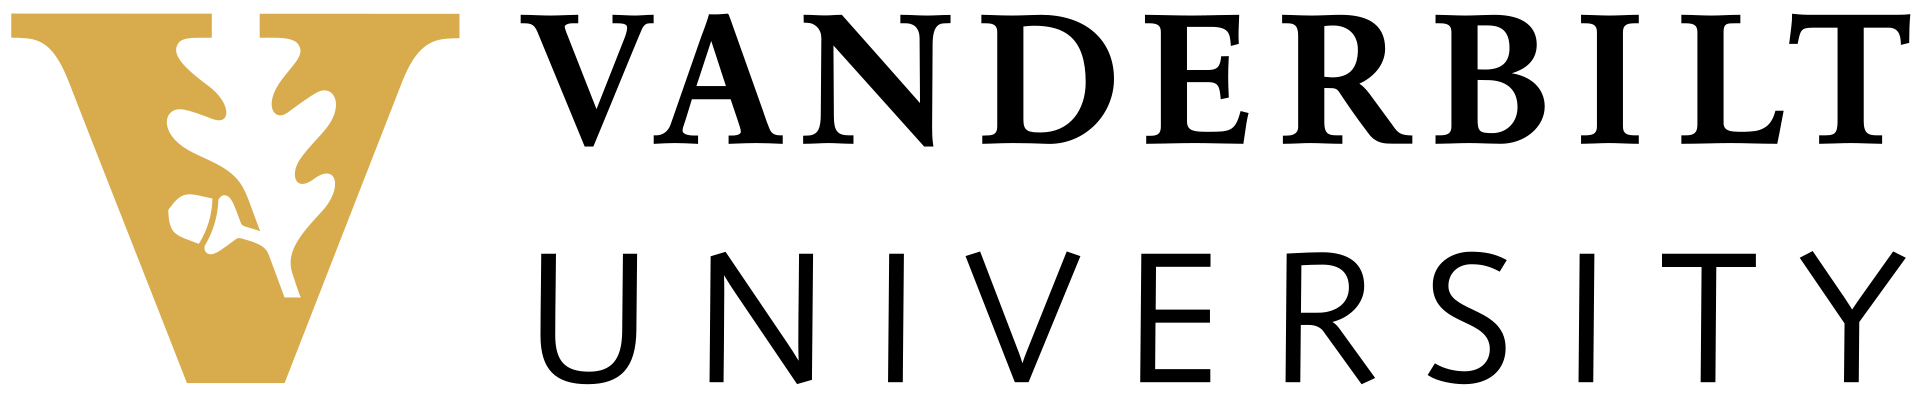 Vanderbilt University logo, By Source, Fair use, http://en.wikipedia.org/w/index.php?curid=13301785"